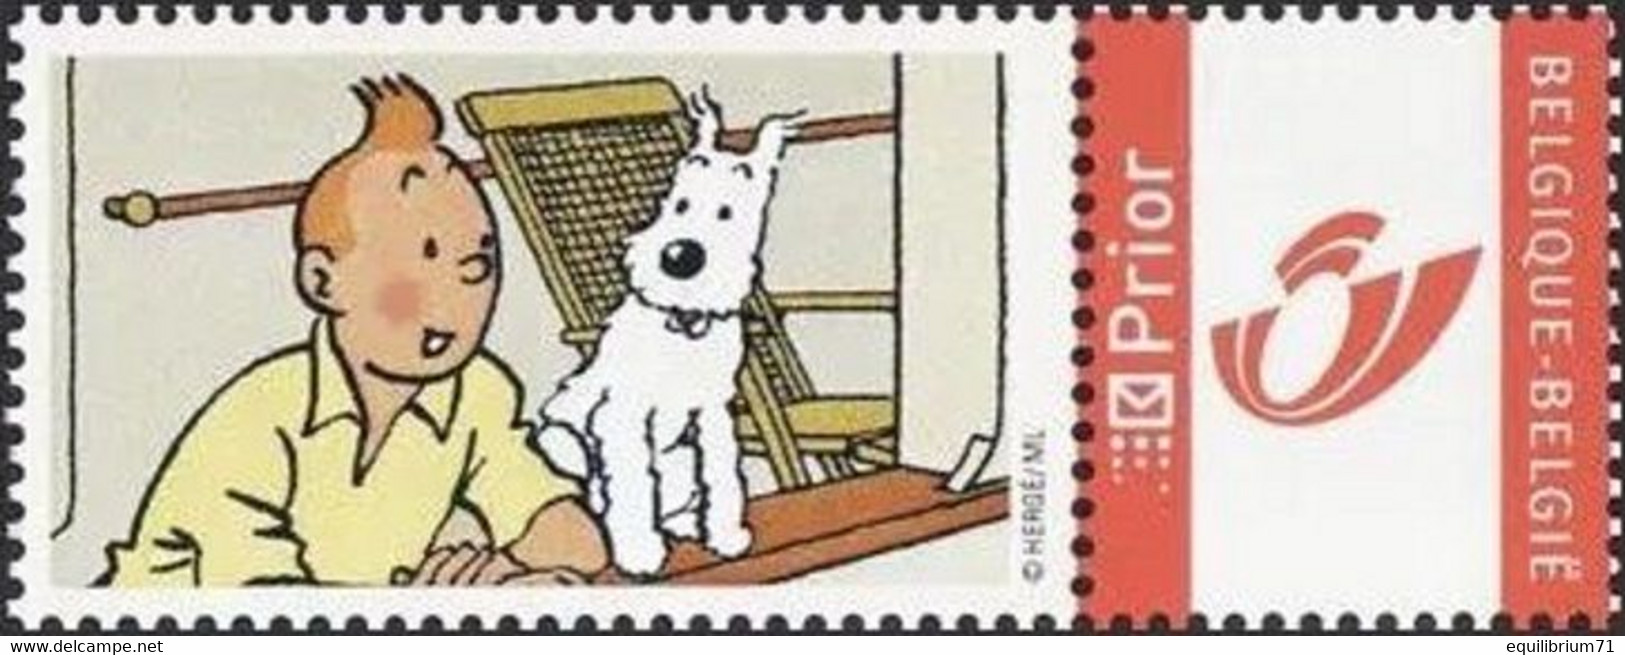 DUOSTAMP** / MYSTAMP**-  Tintin - Vacances  / Kuifje – Vakantie / Tim - Urlaub / (Hergé) - Ungebraucht